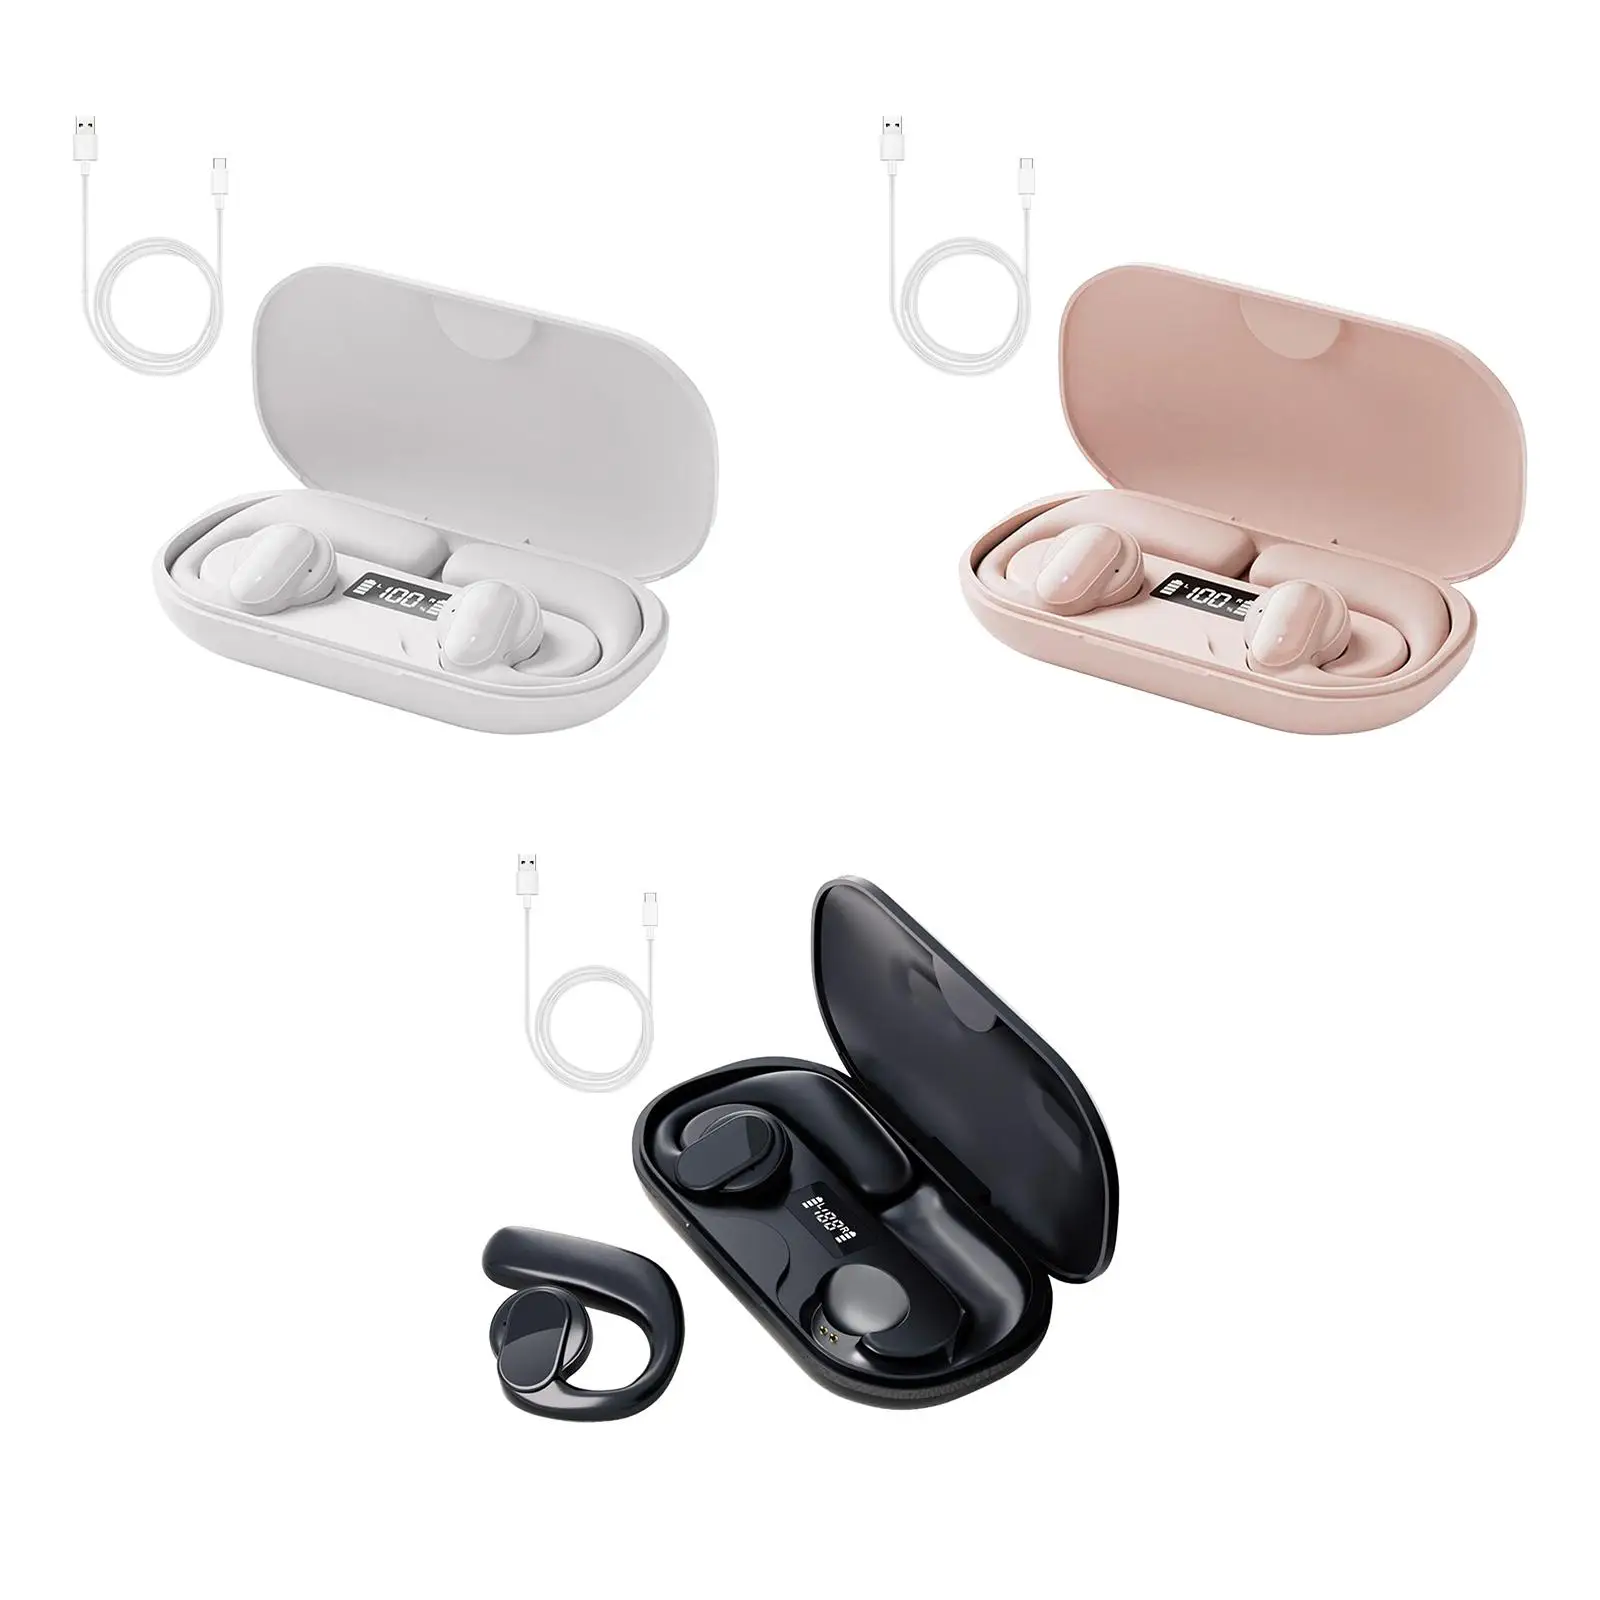 Bluetooth Headphones Stereo IPX6 Waterproof HiFi Ergonomic Ear Hooks Earphones for Sports Gaming All Smart Phones Laptop Working